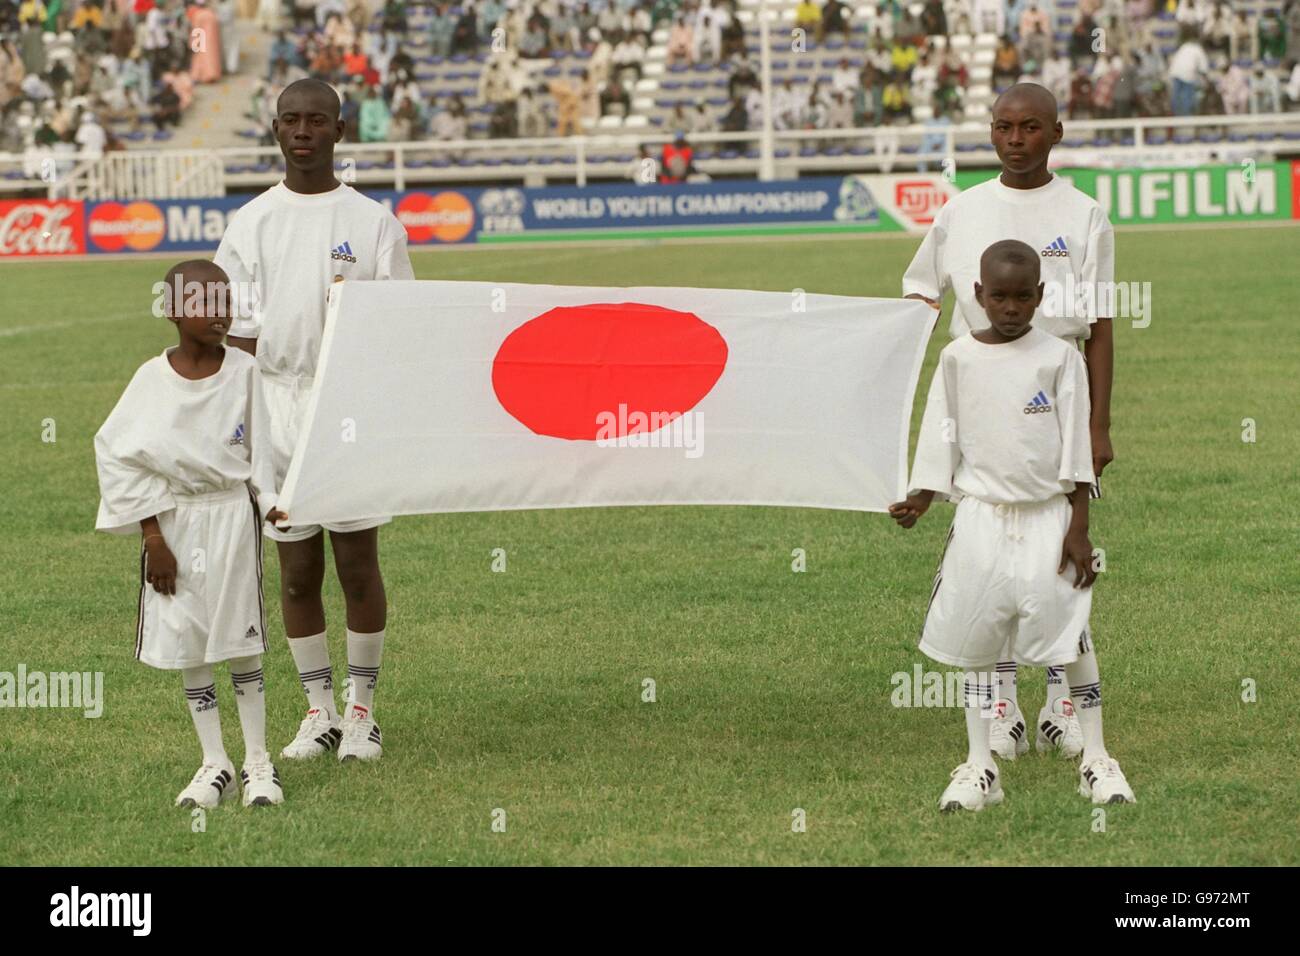 Fußball - Weltjugendcup - Gruppe E - Kamerun gegen Japan. Nigrische Kinder, die die Flagge Japans halten Stockfoto